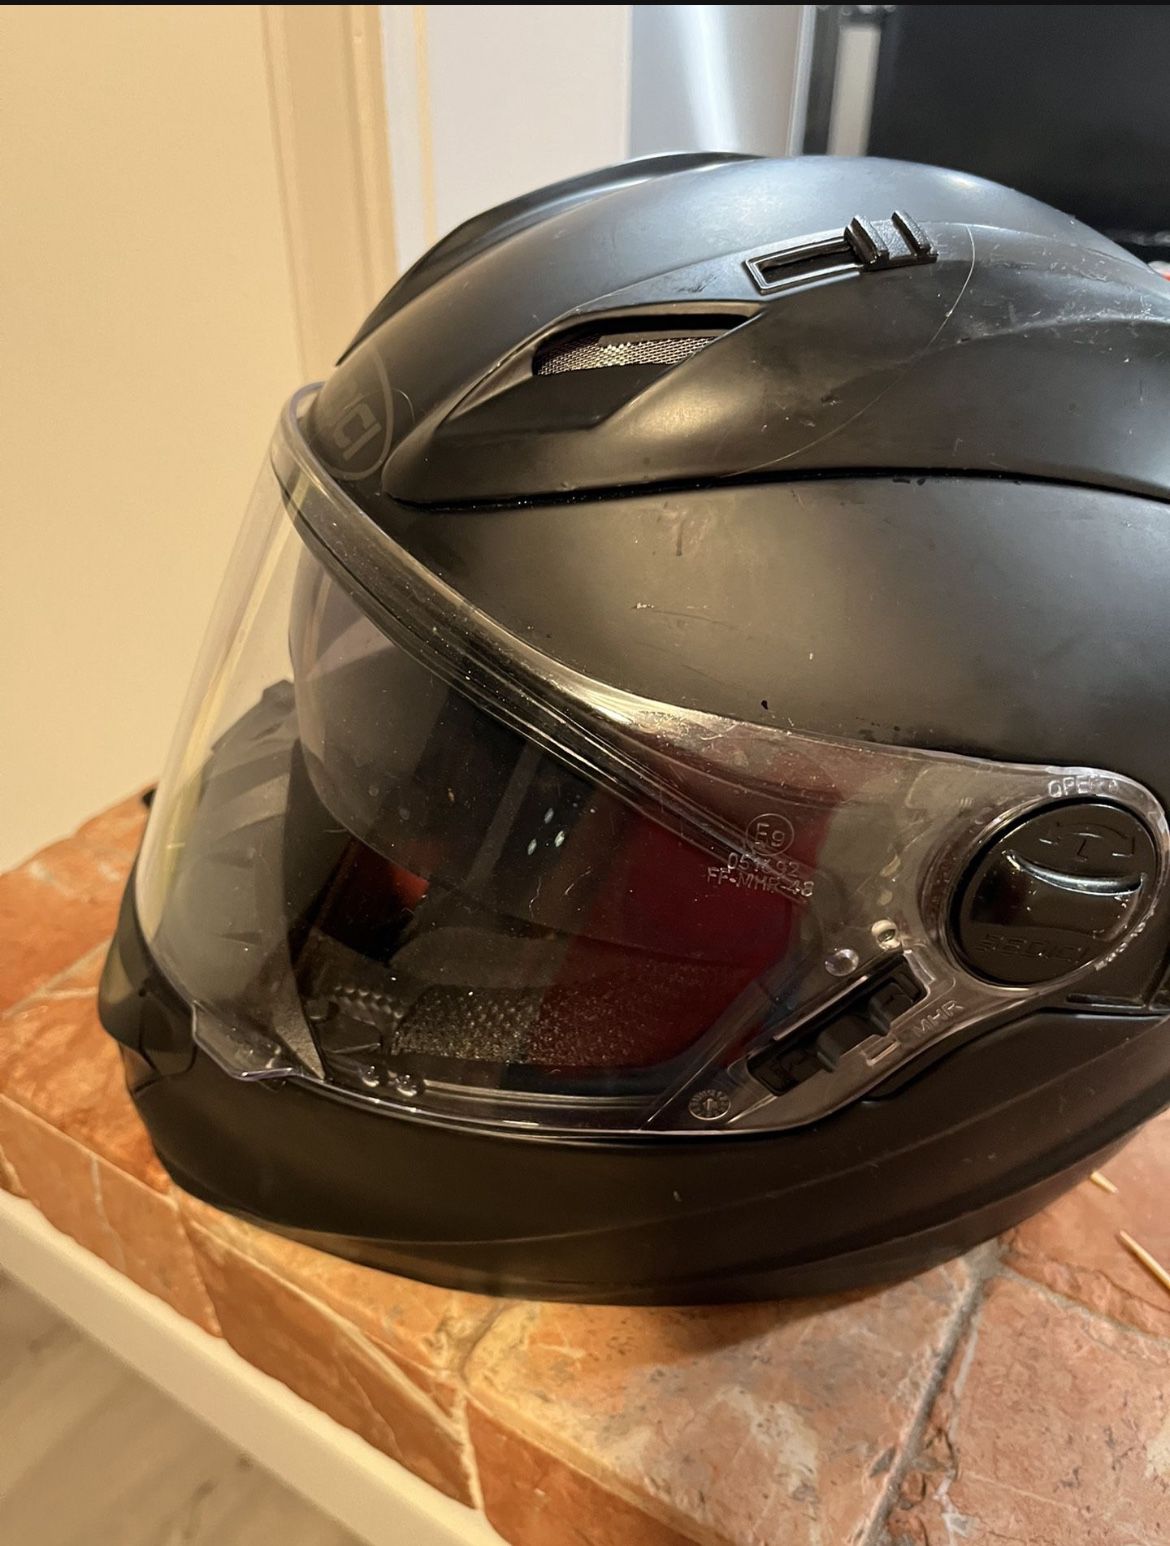 EKOI racing Helmet Size M for Sale in Miami, FL - OfferUp